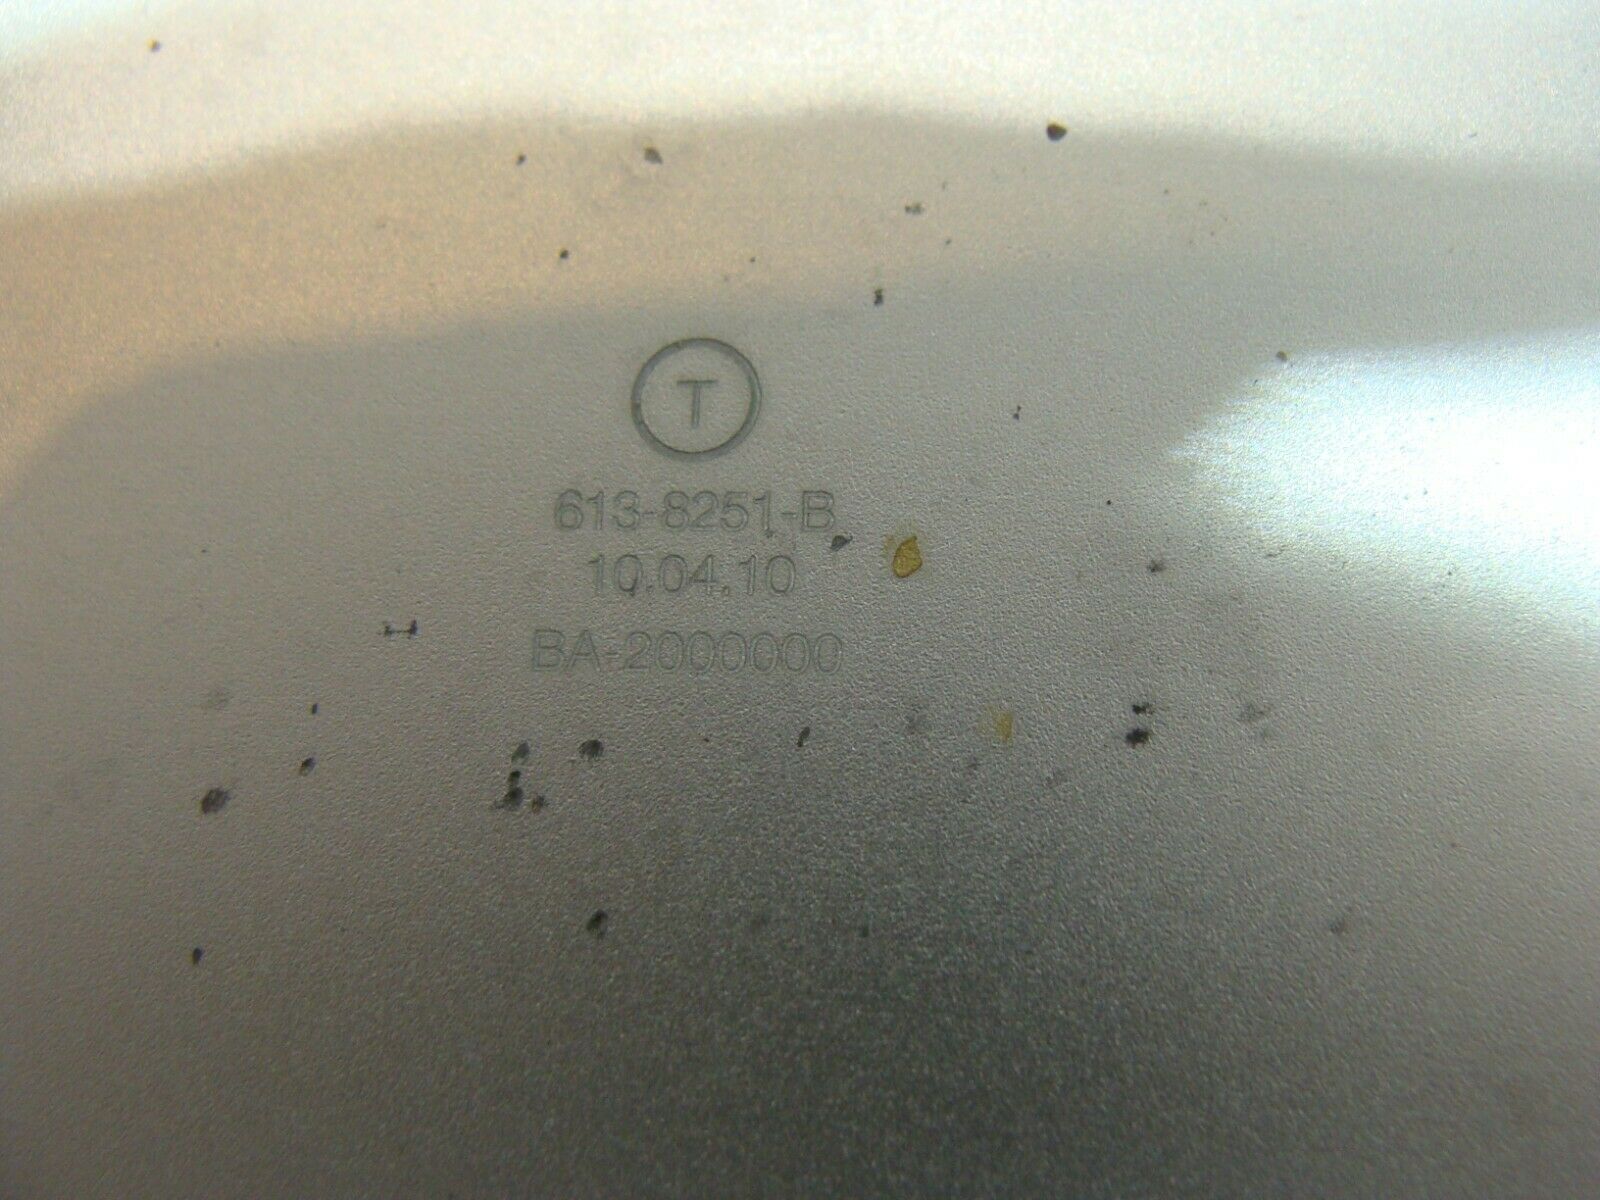 MacBook Pro A1286 MC371LL/A Early 2010 15